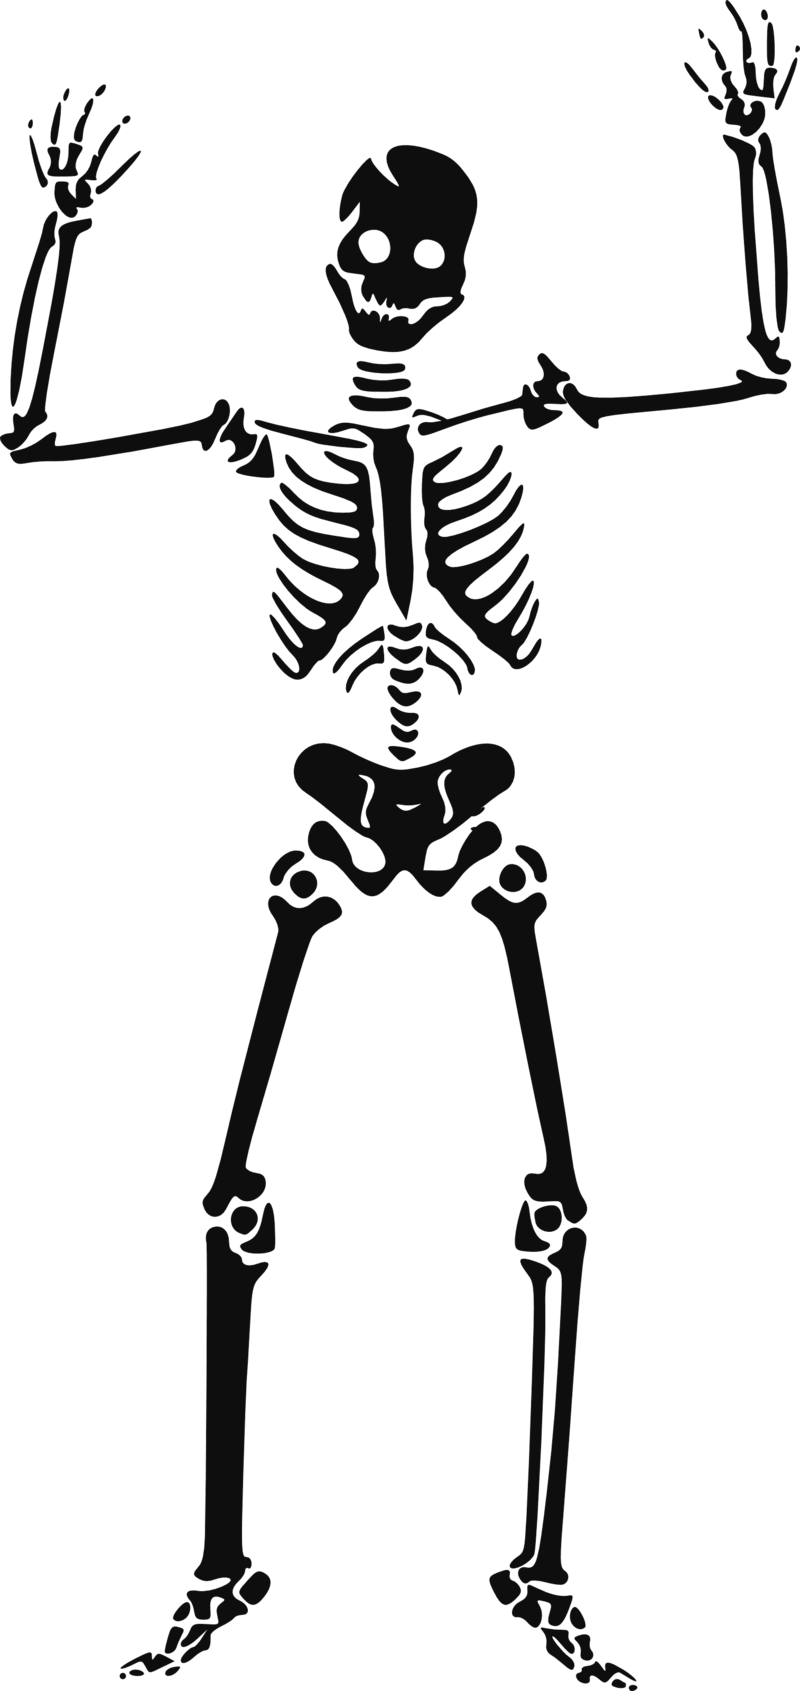 clipart skeleton file